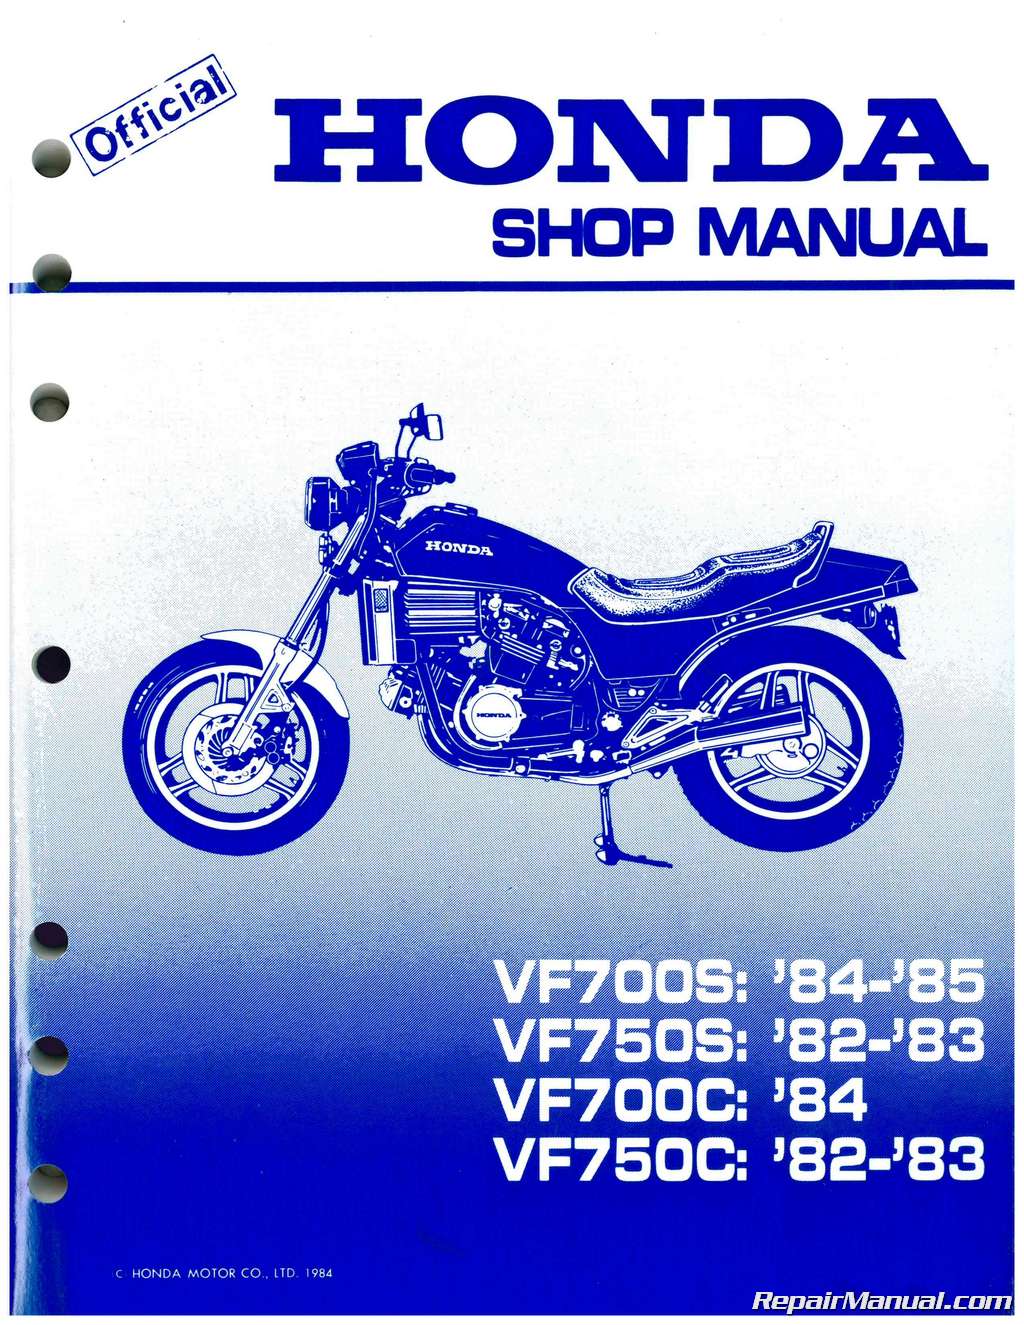 1982 Honda magna wiring diagram #2